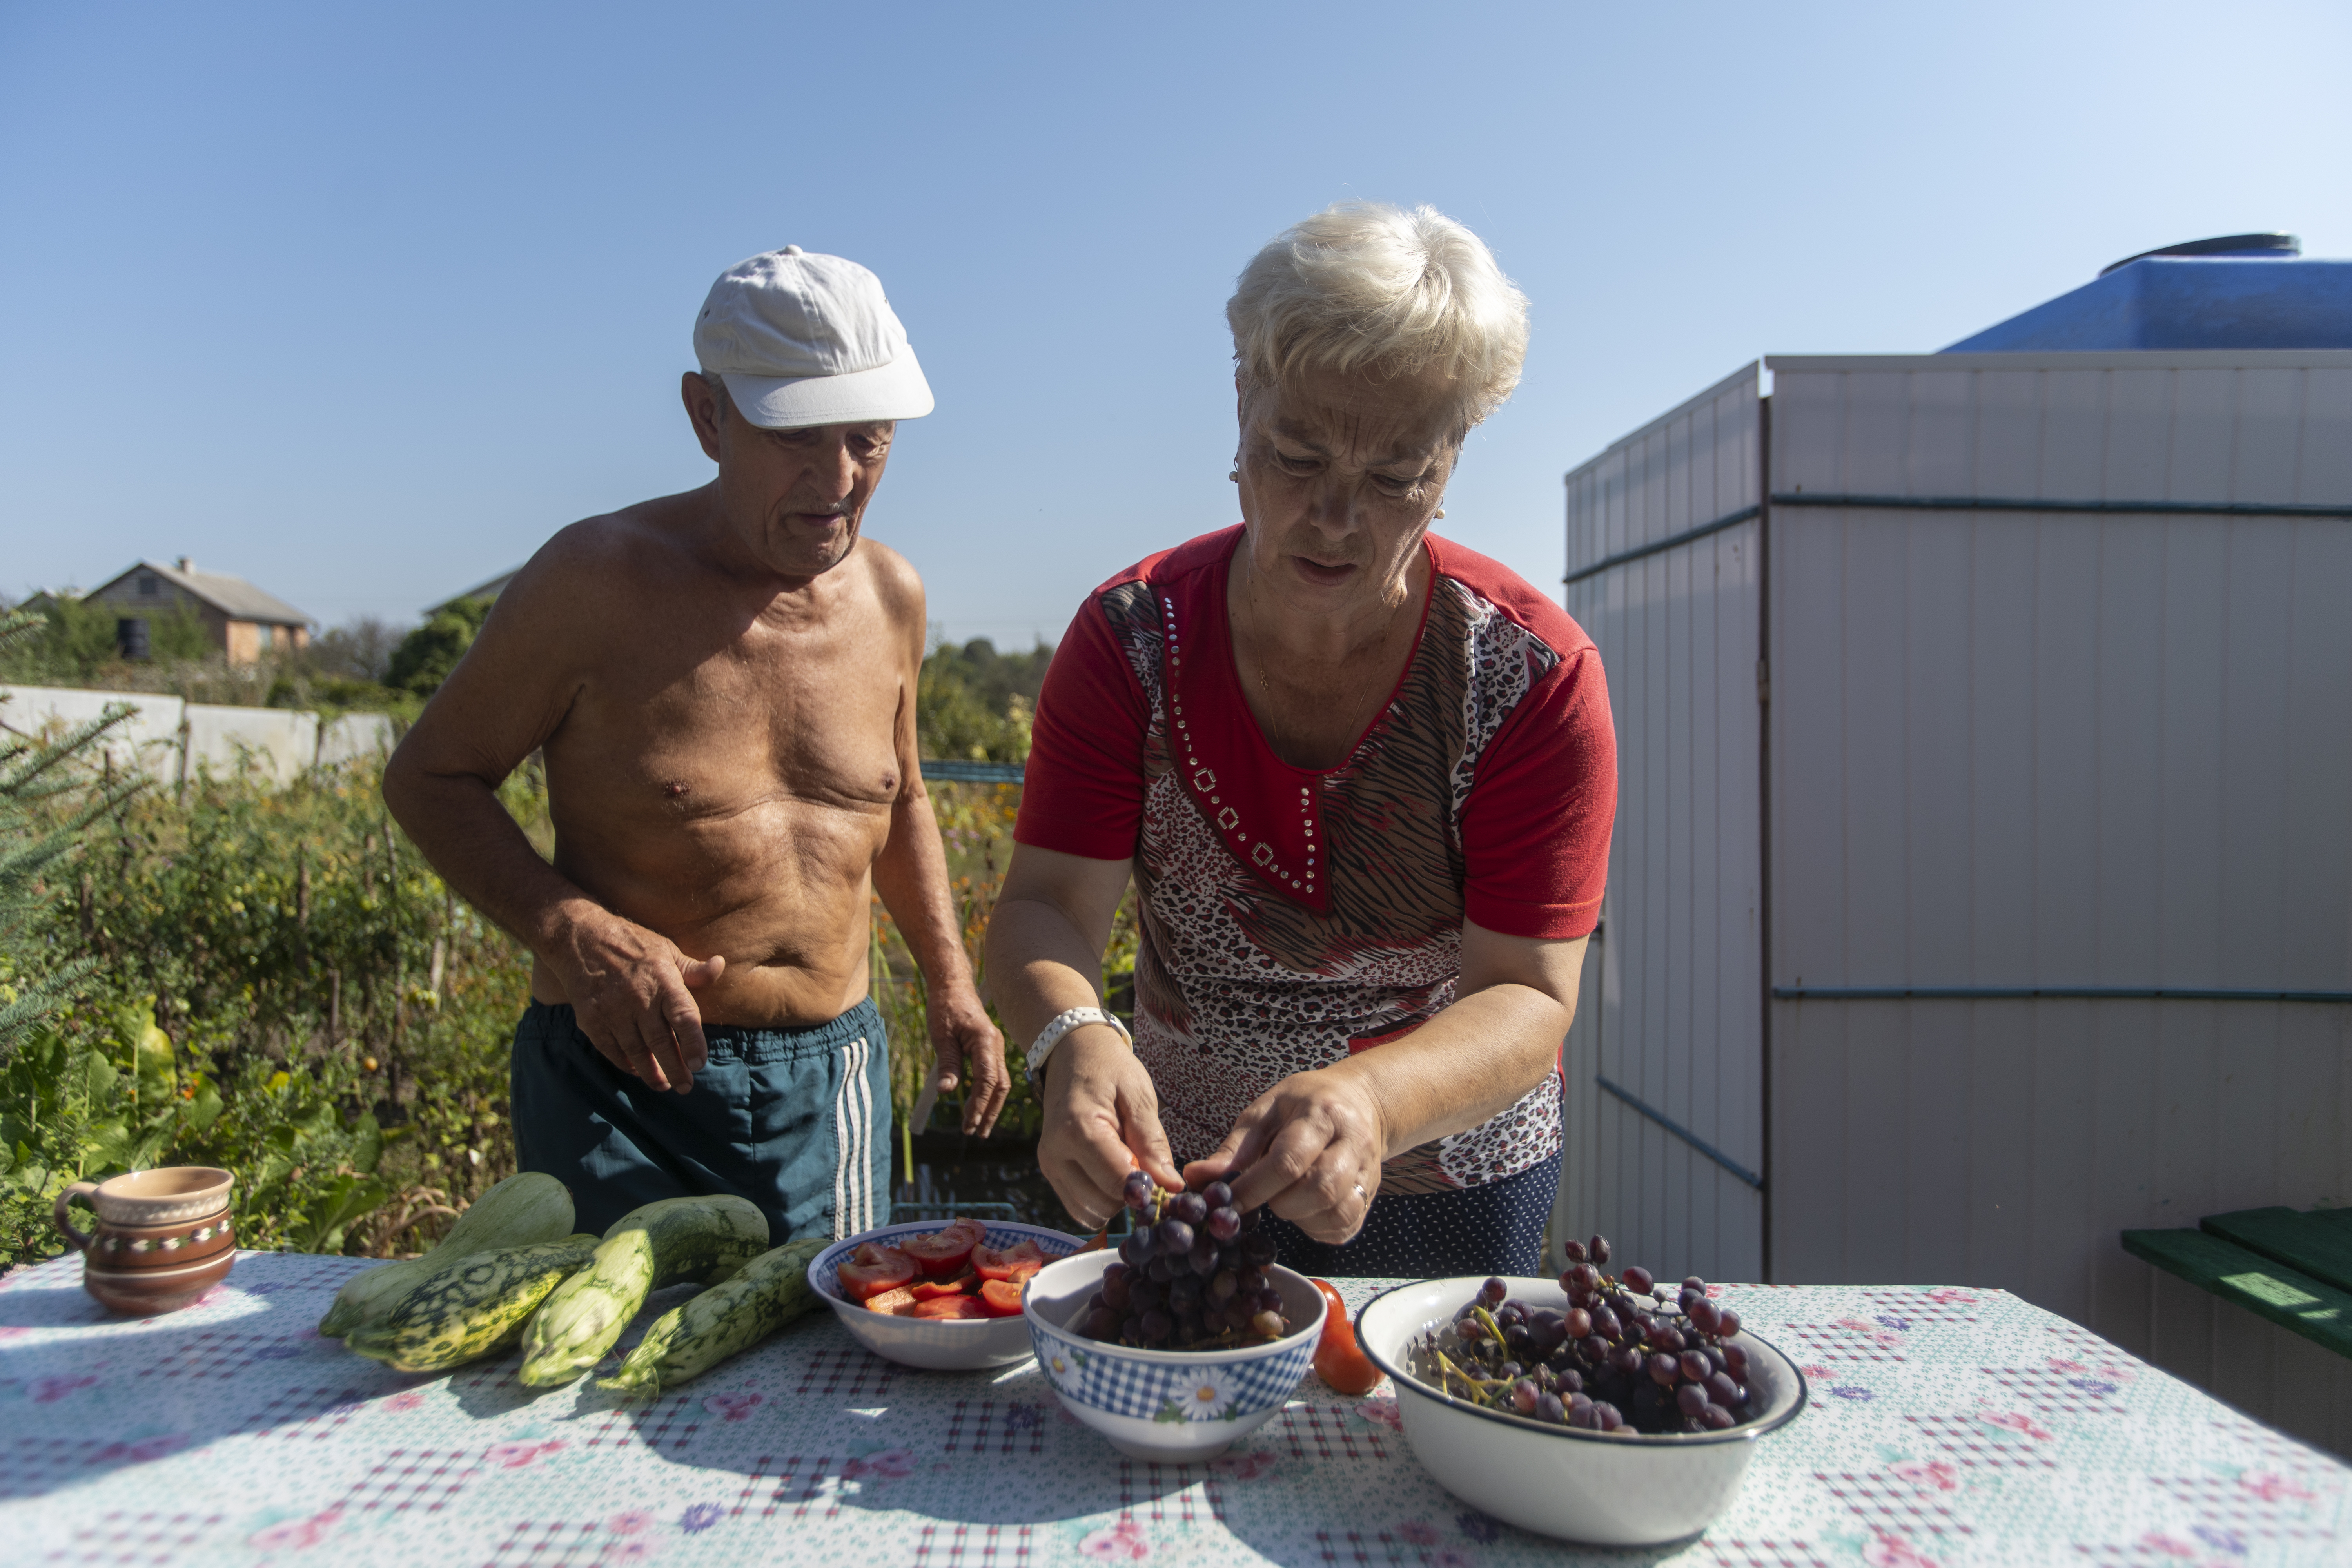 Viktor and Lubov prepare fresh cucumber, tomato, and grapes at their dacha (AtlasNetwork.org Photo/Bernat Parera).